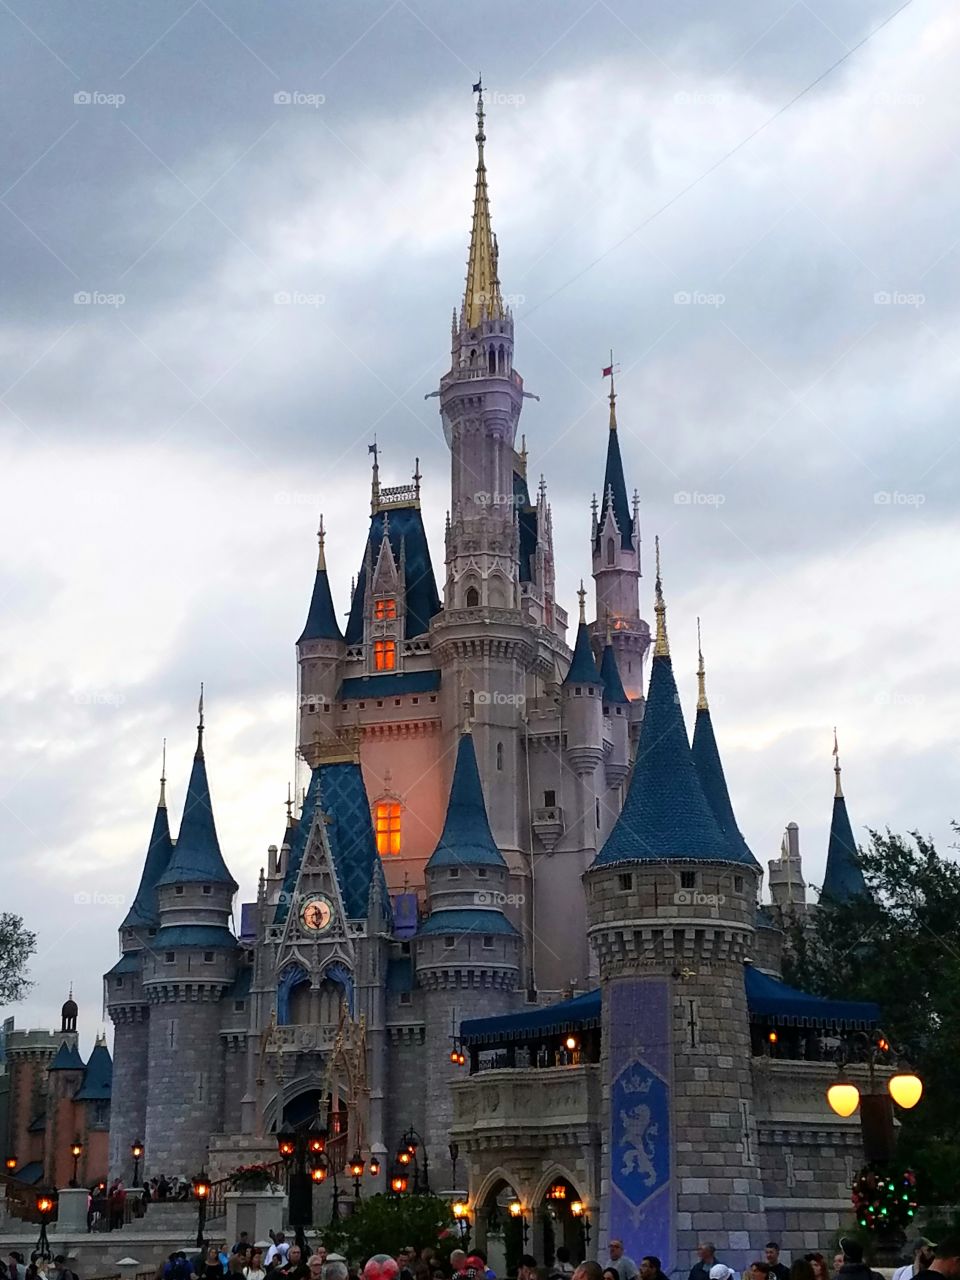 Cinderella's castle in Disney's Magic Kingdom